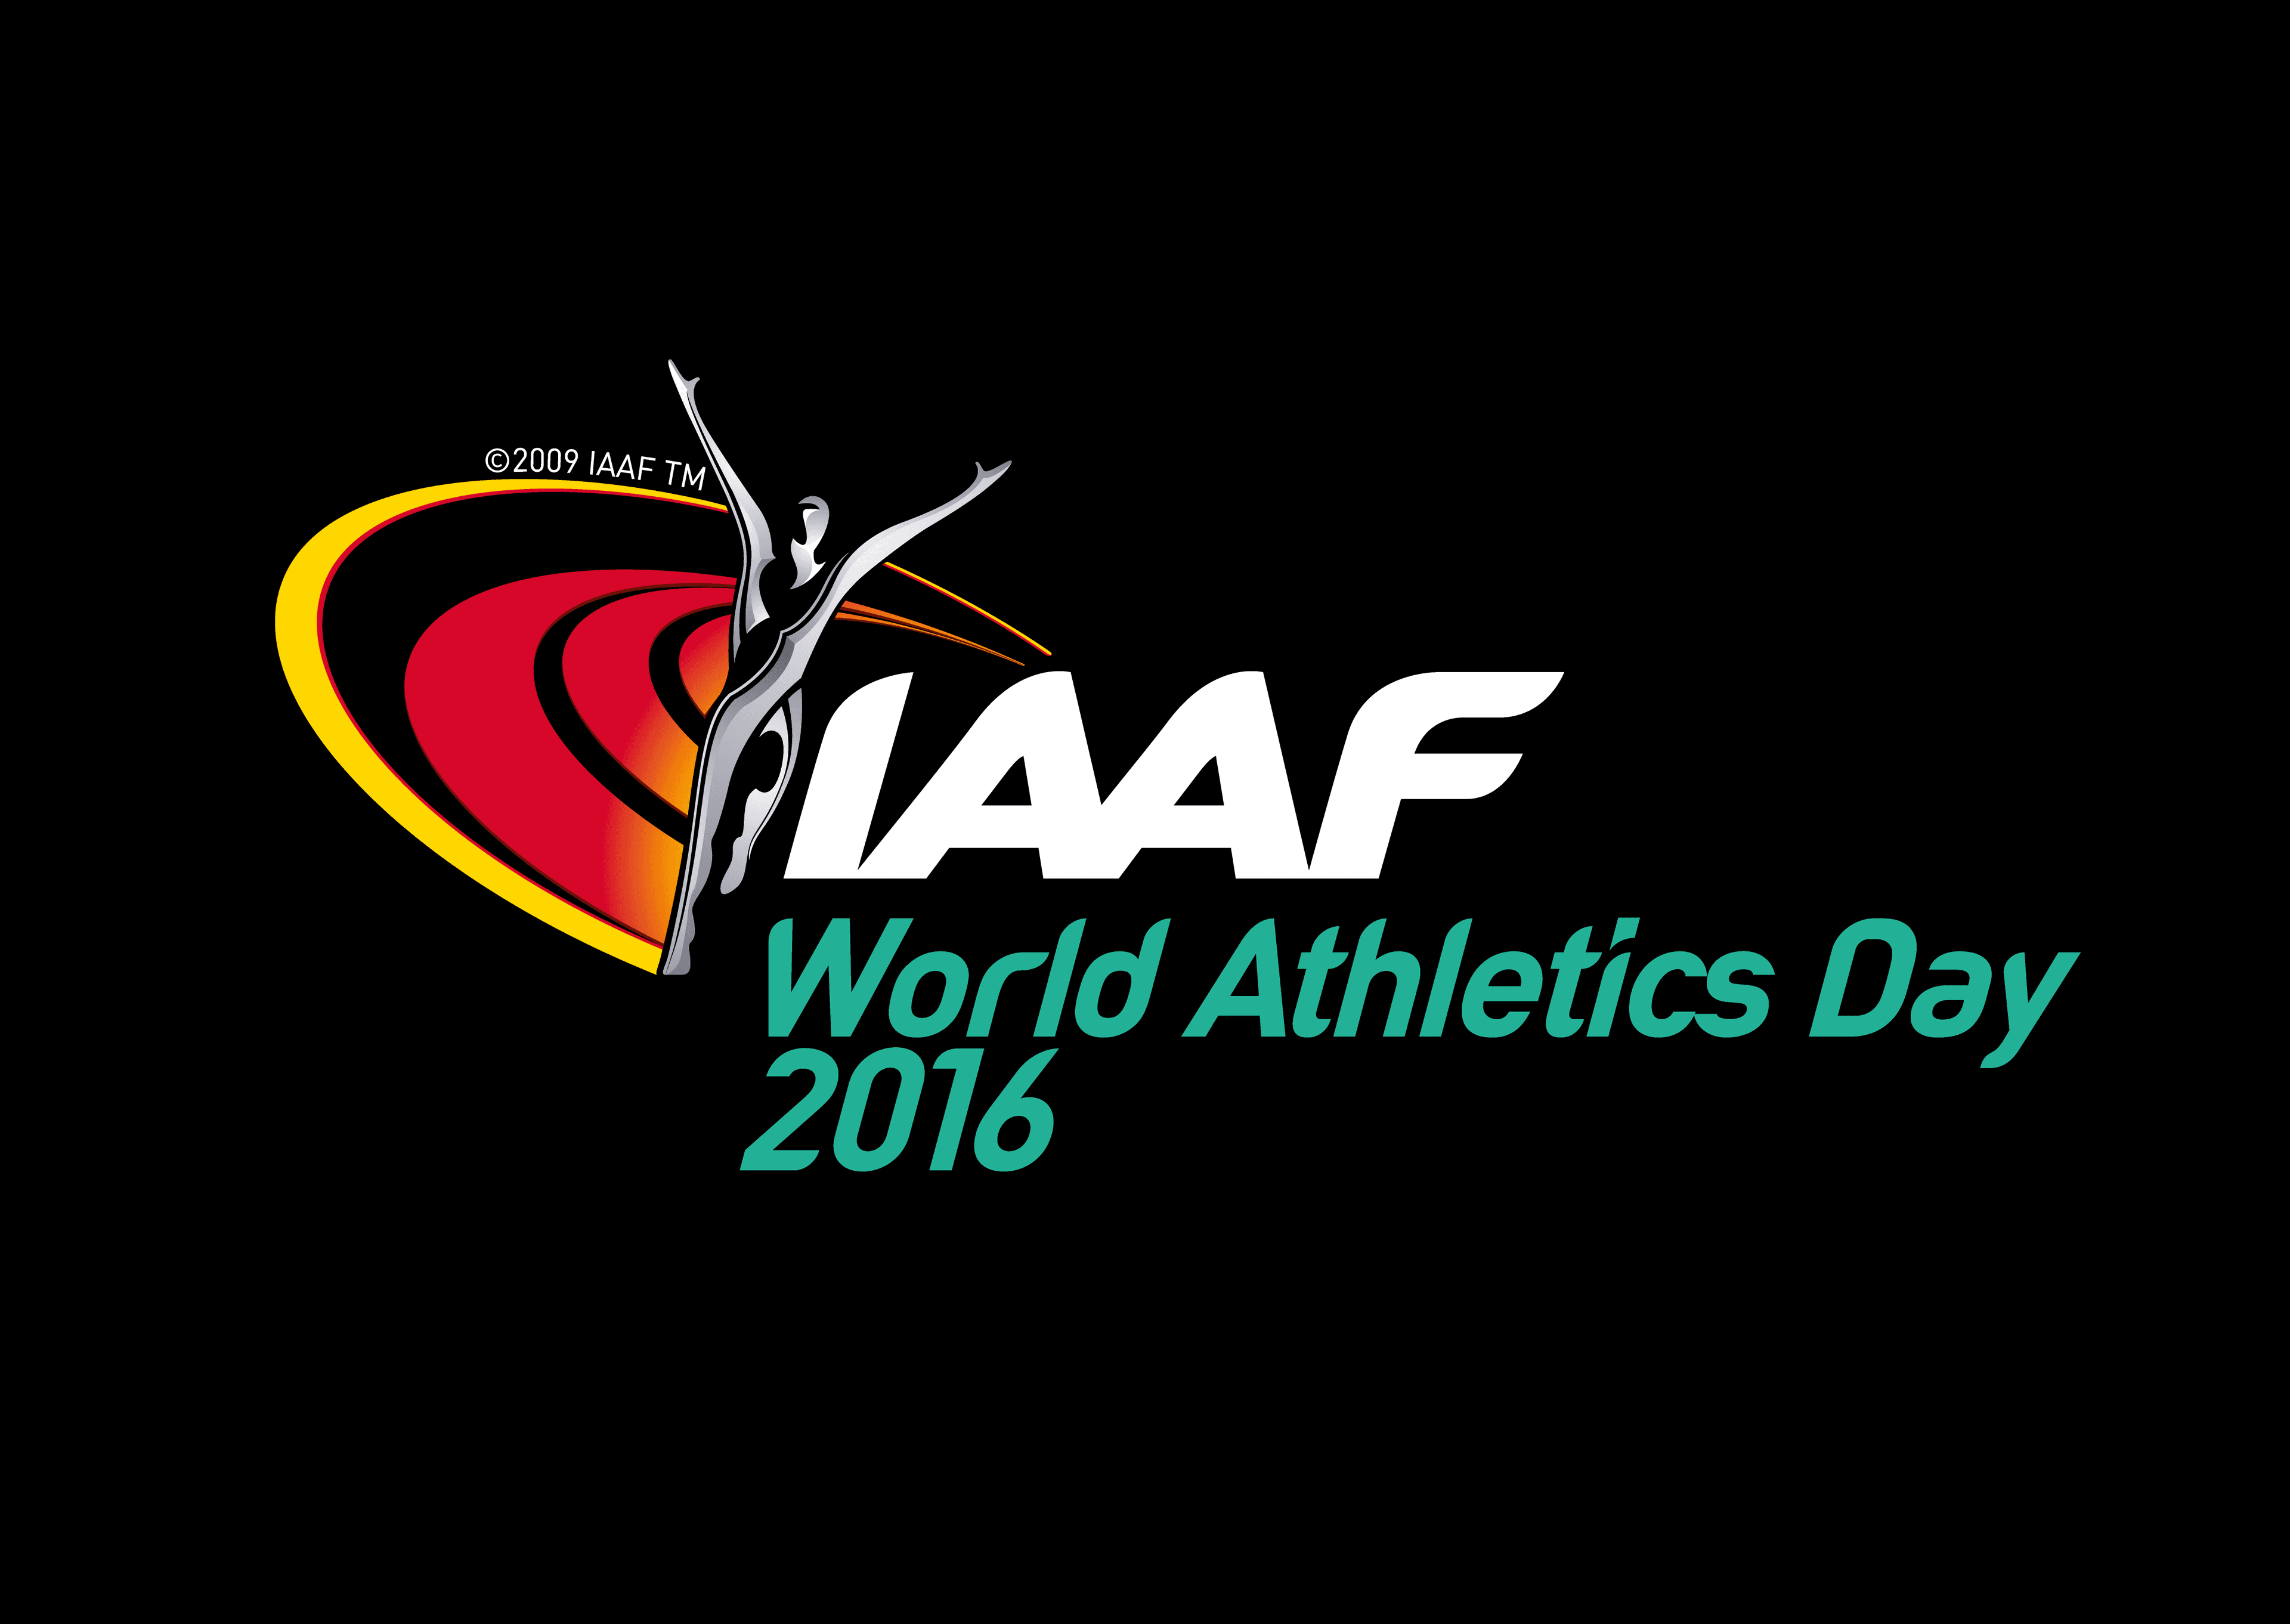 fc-dark-world-athletics-day-logo-2016